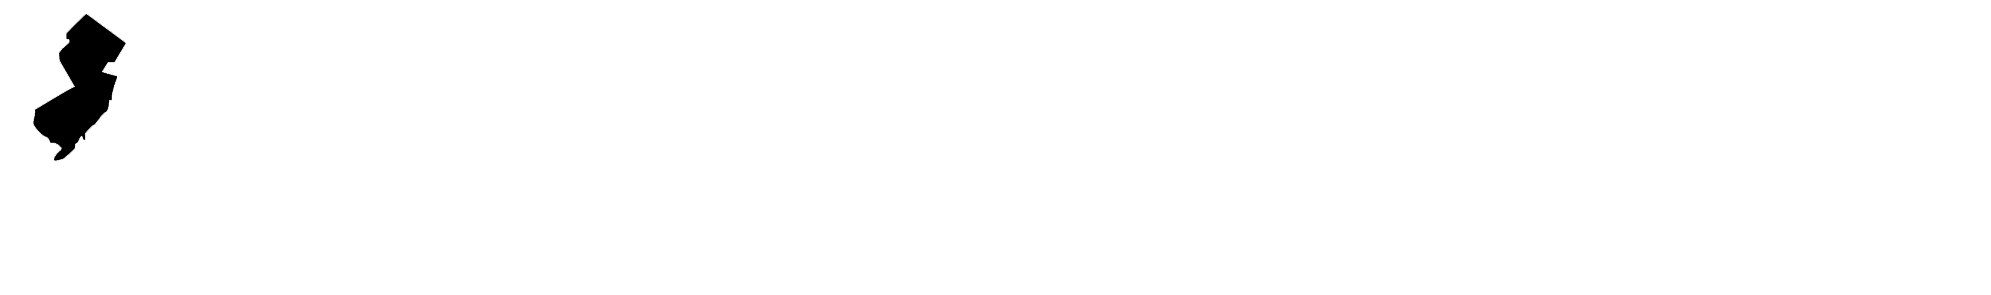 New Jersey Association of Railroad Passengers - footer logo